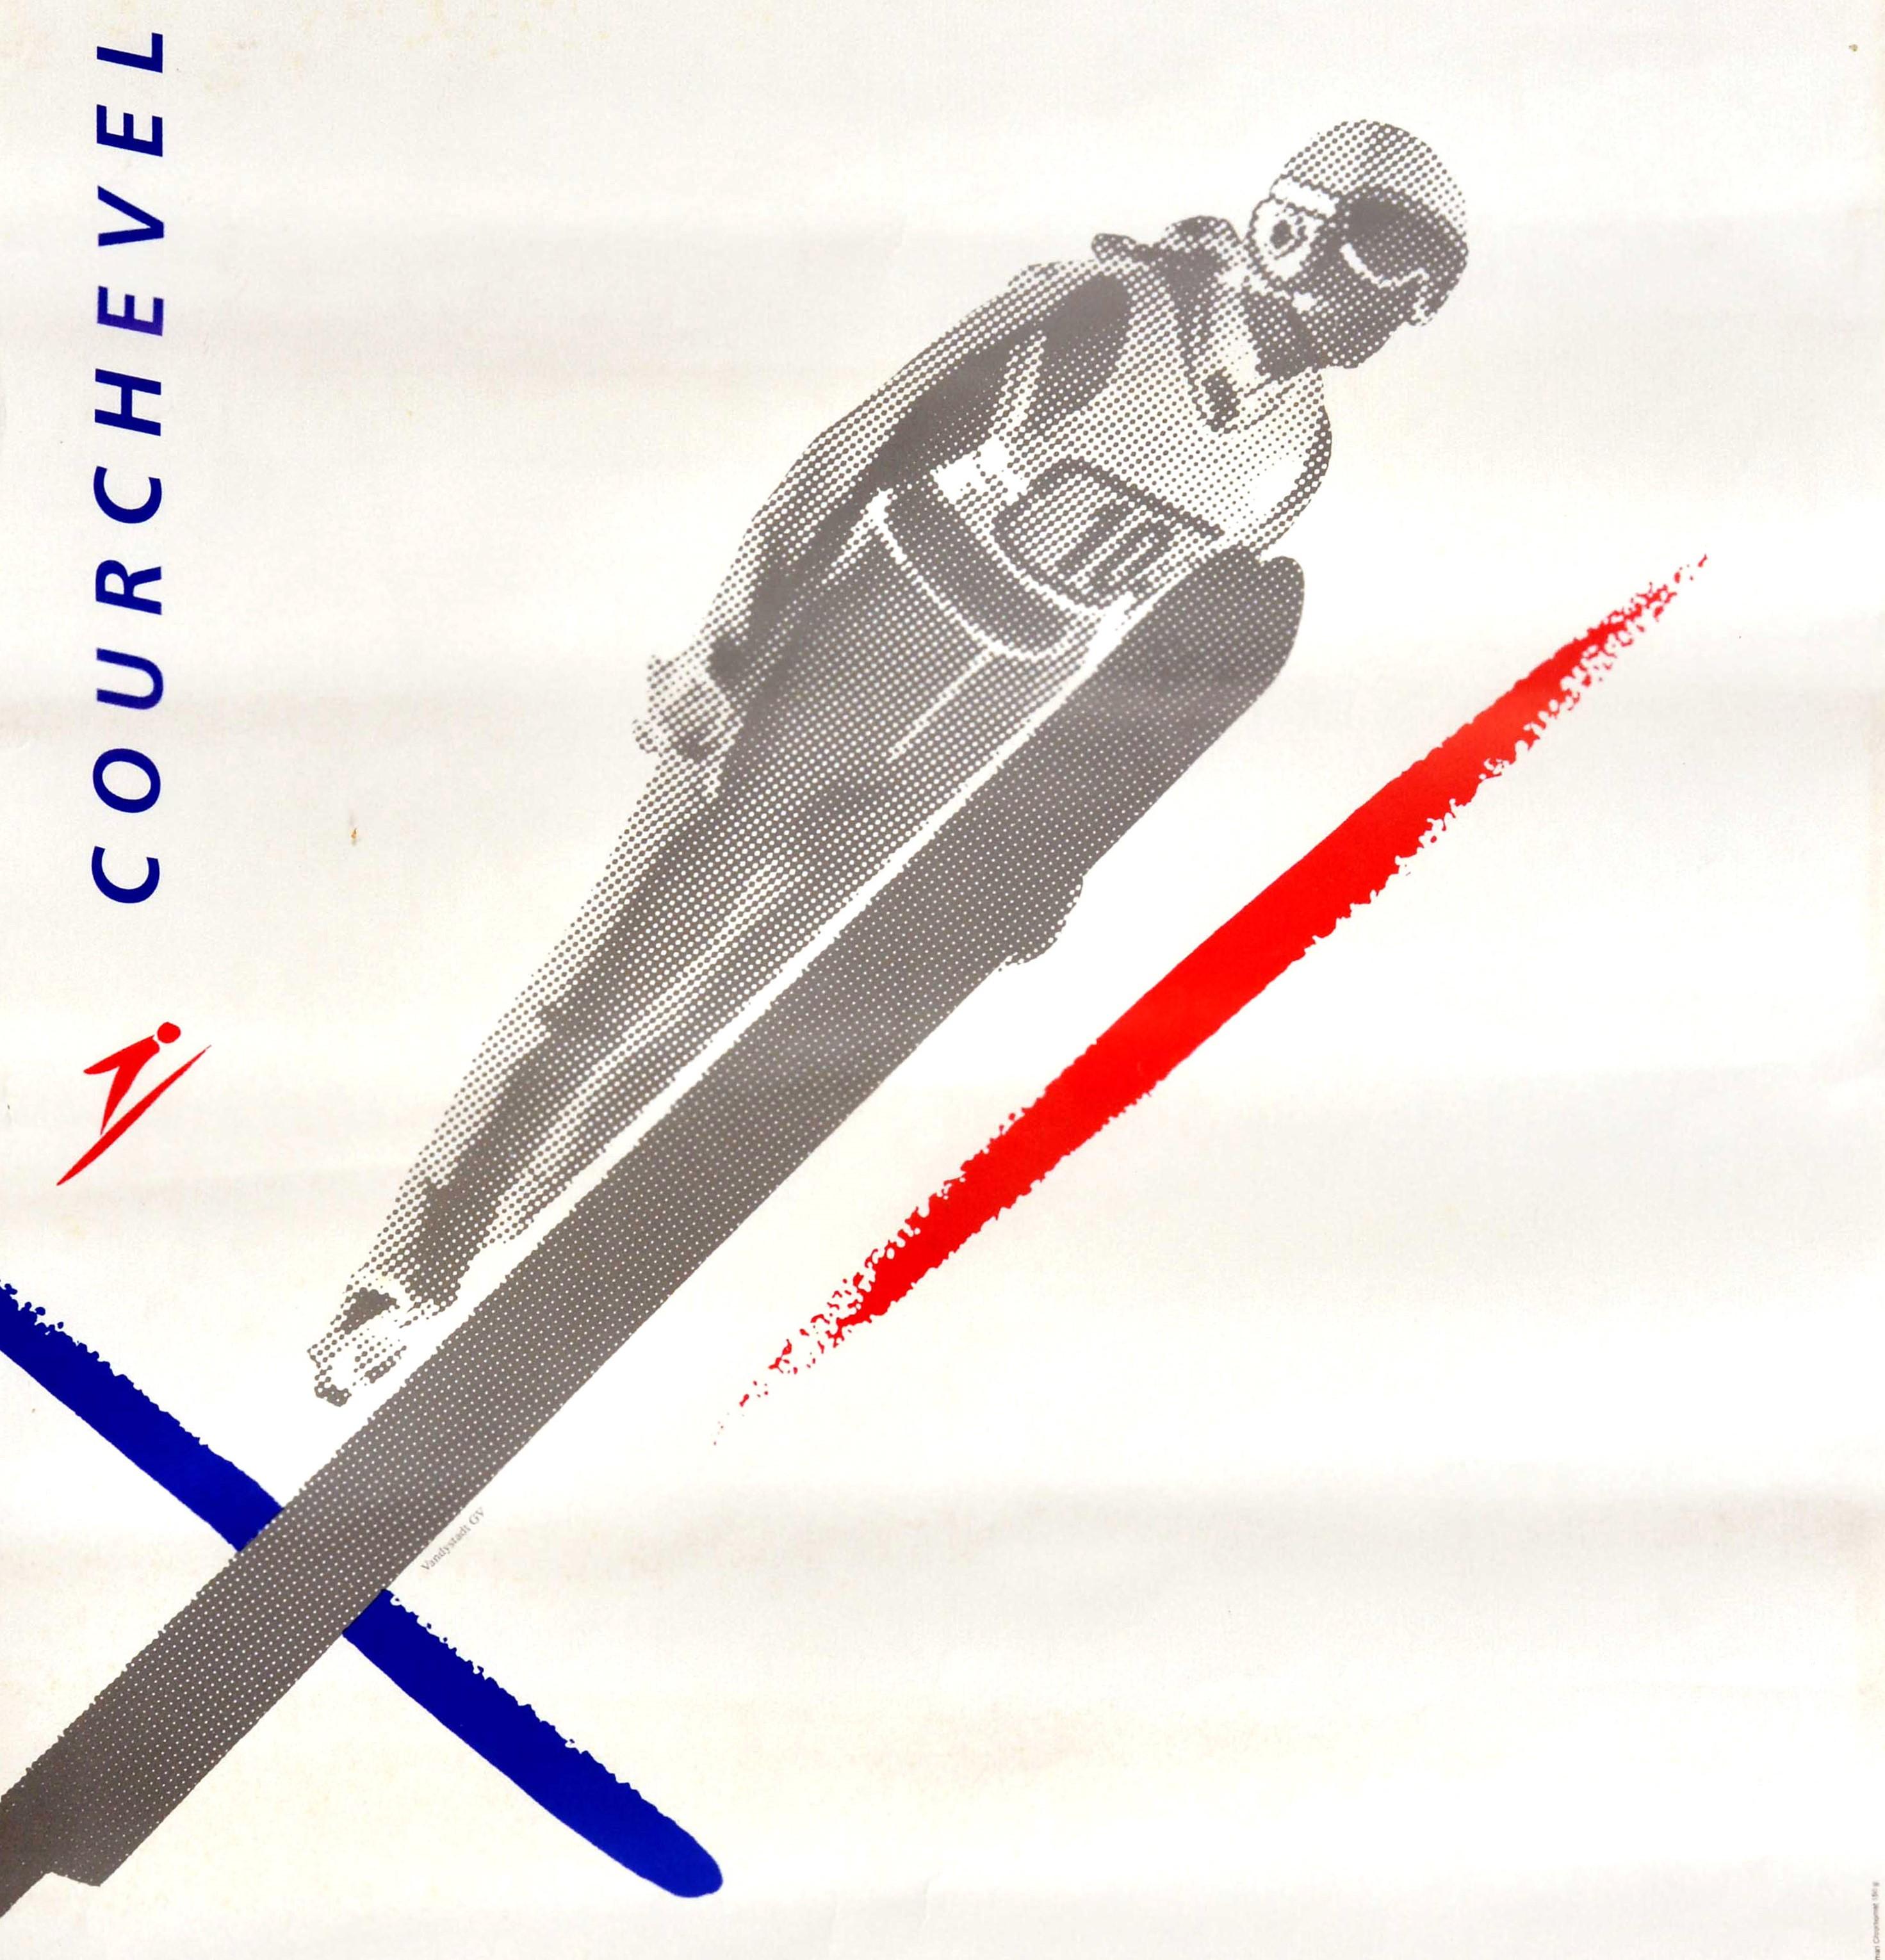 courchevel poster